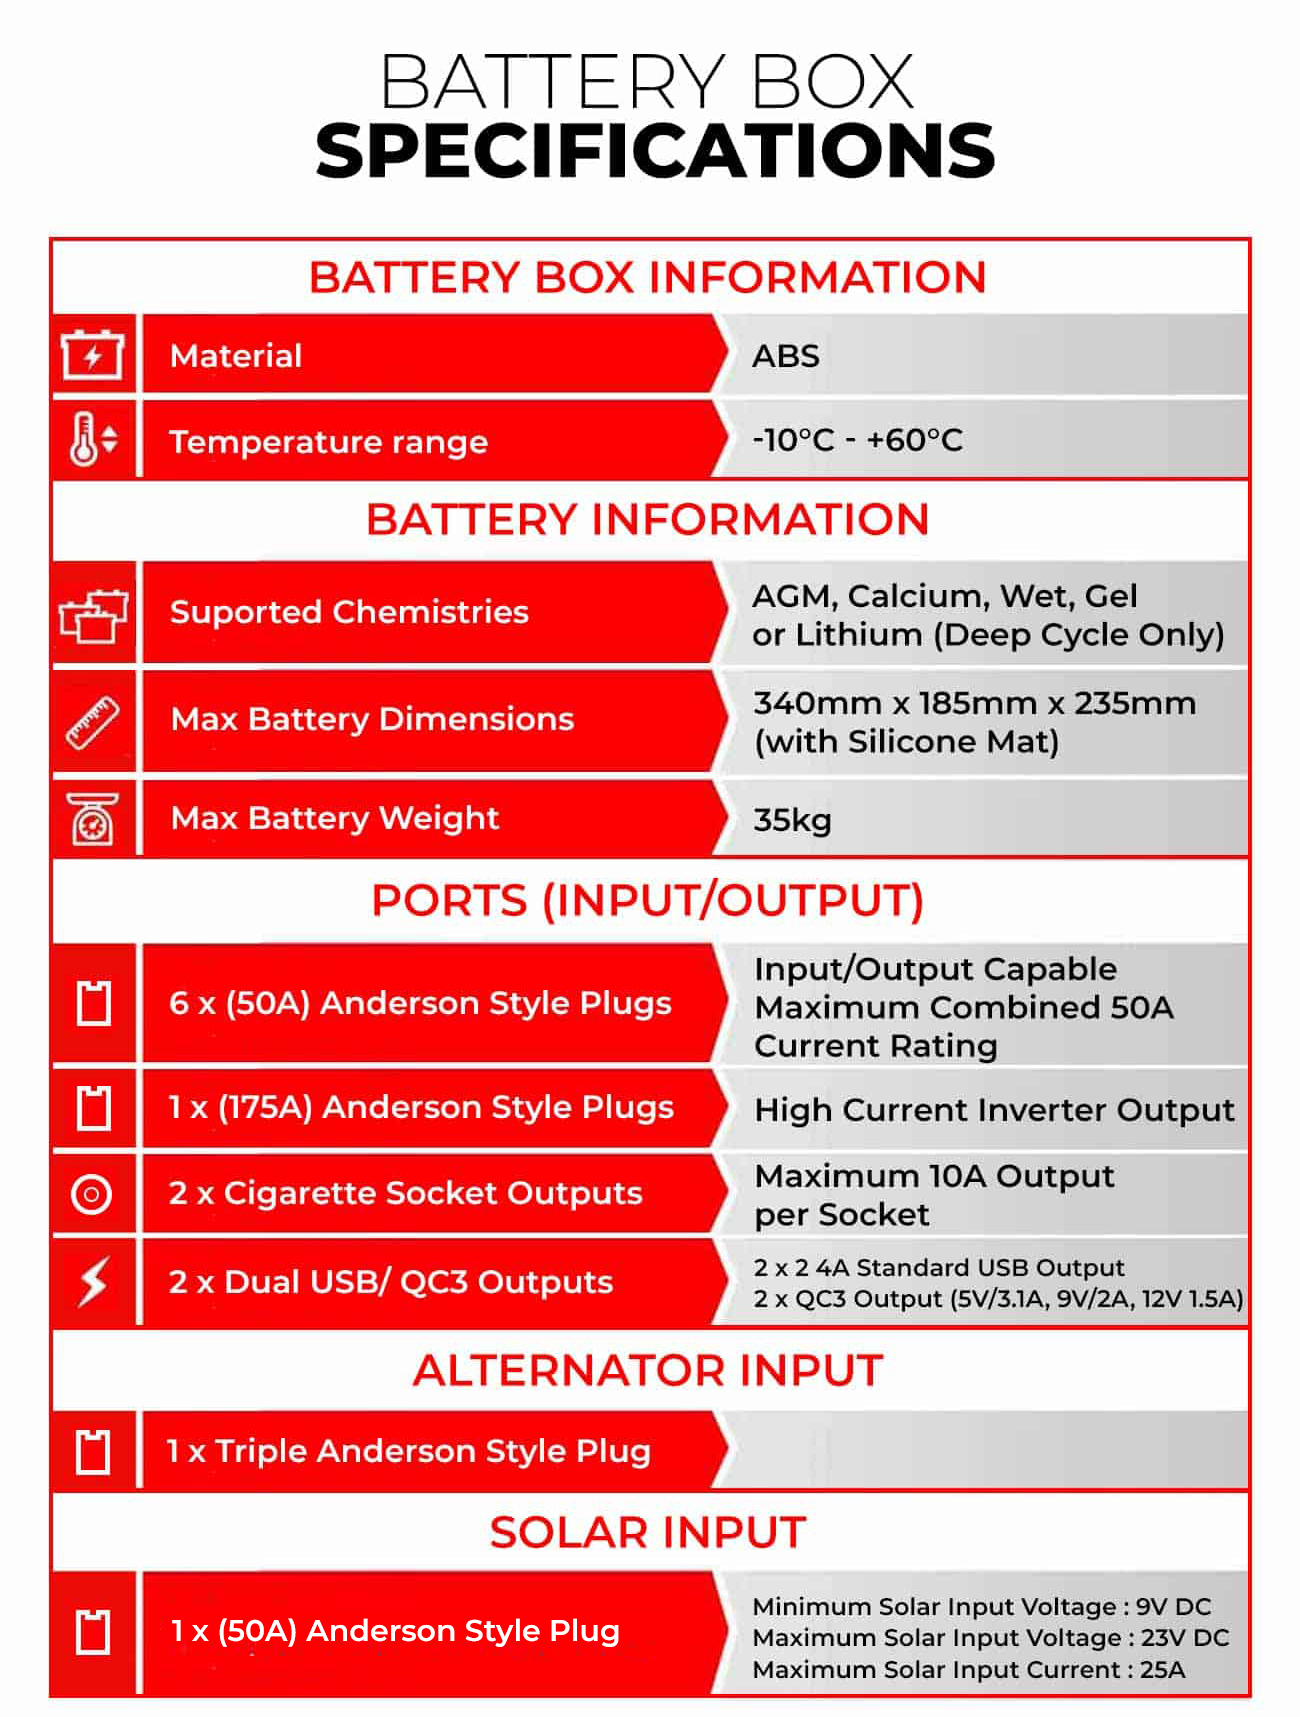 KickAss Portable Battery Box Power Station Accessory Bundle